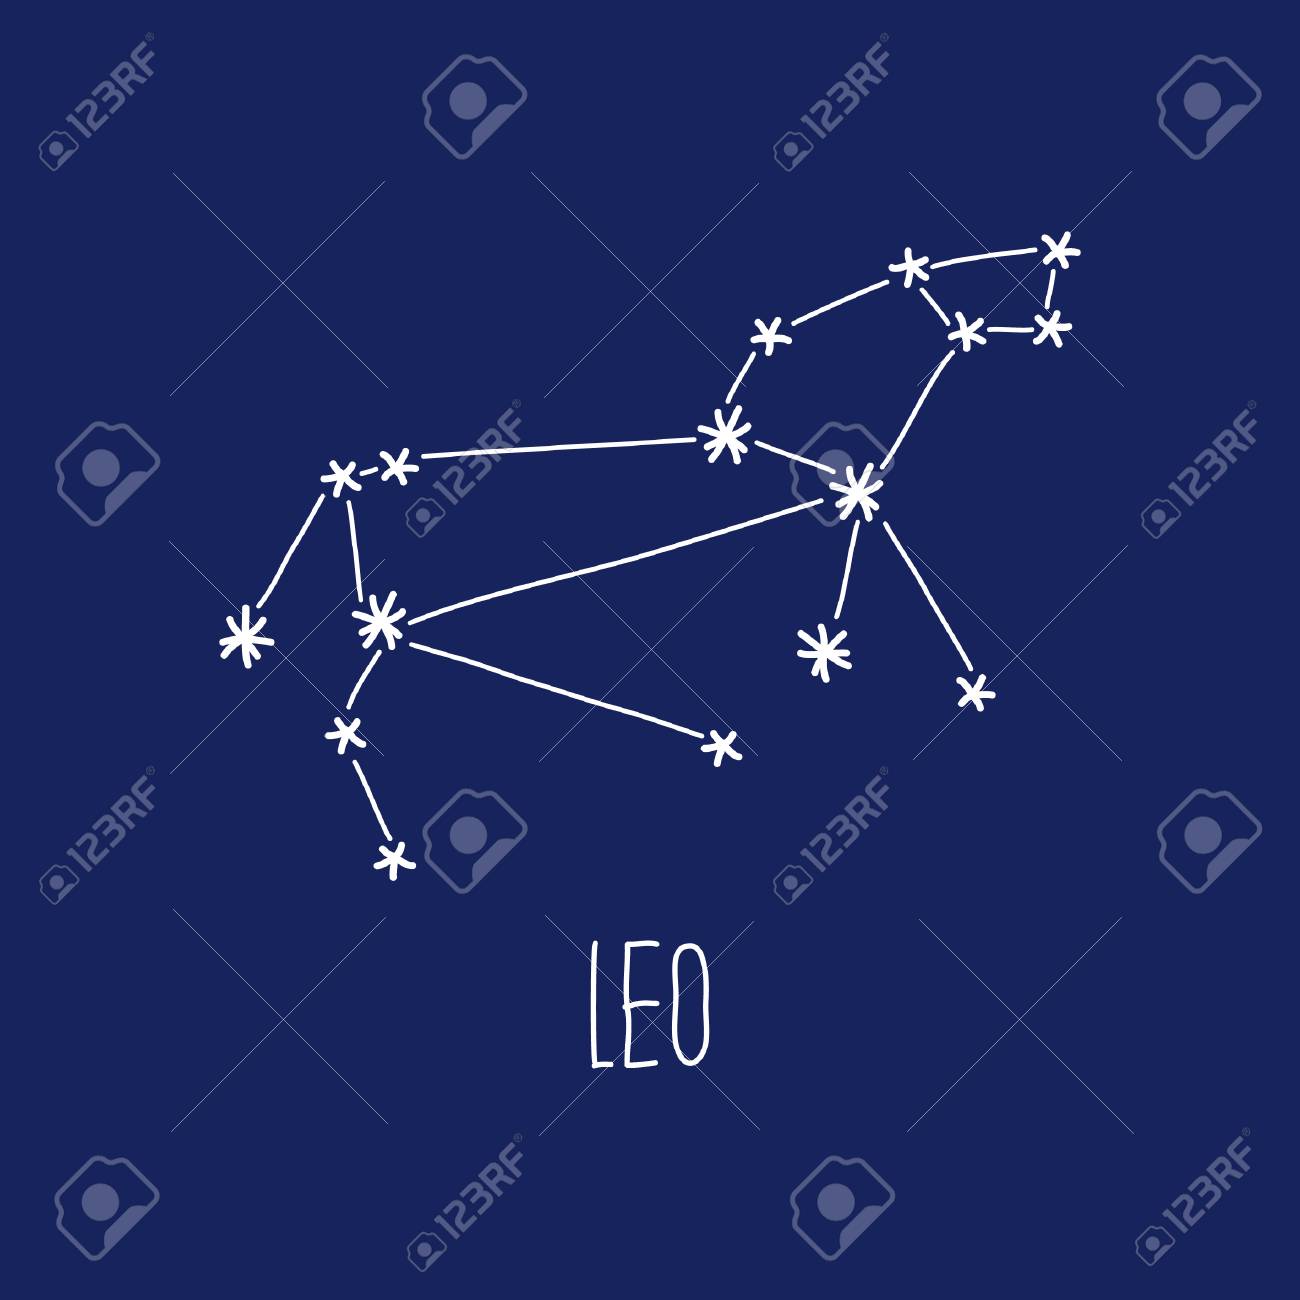 Cute Background With Schematic Hand Drawn Zodiac Constellation